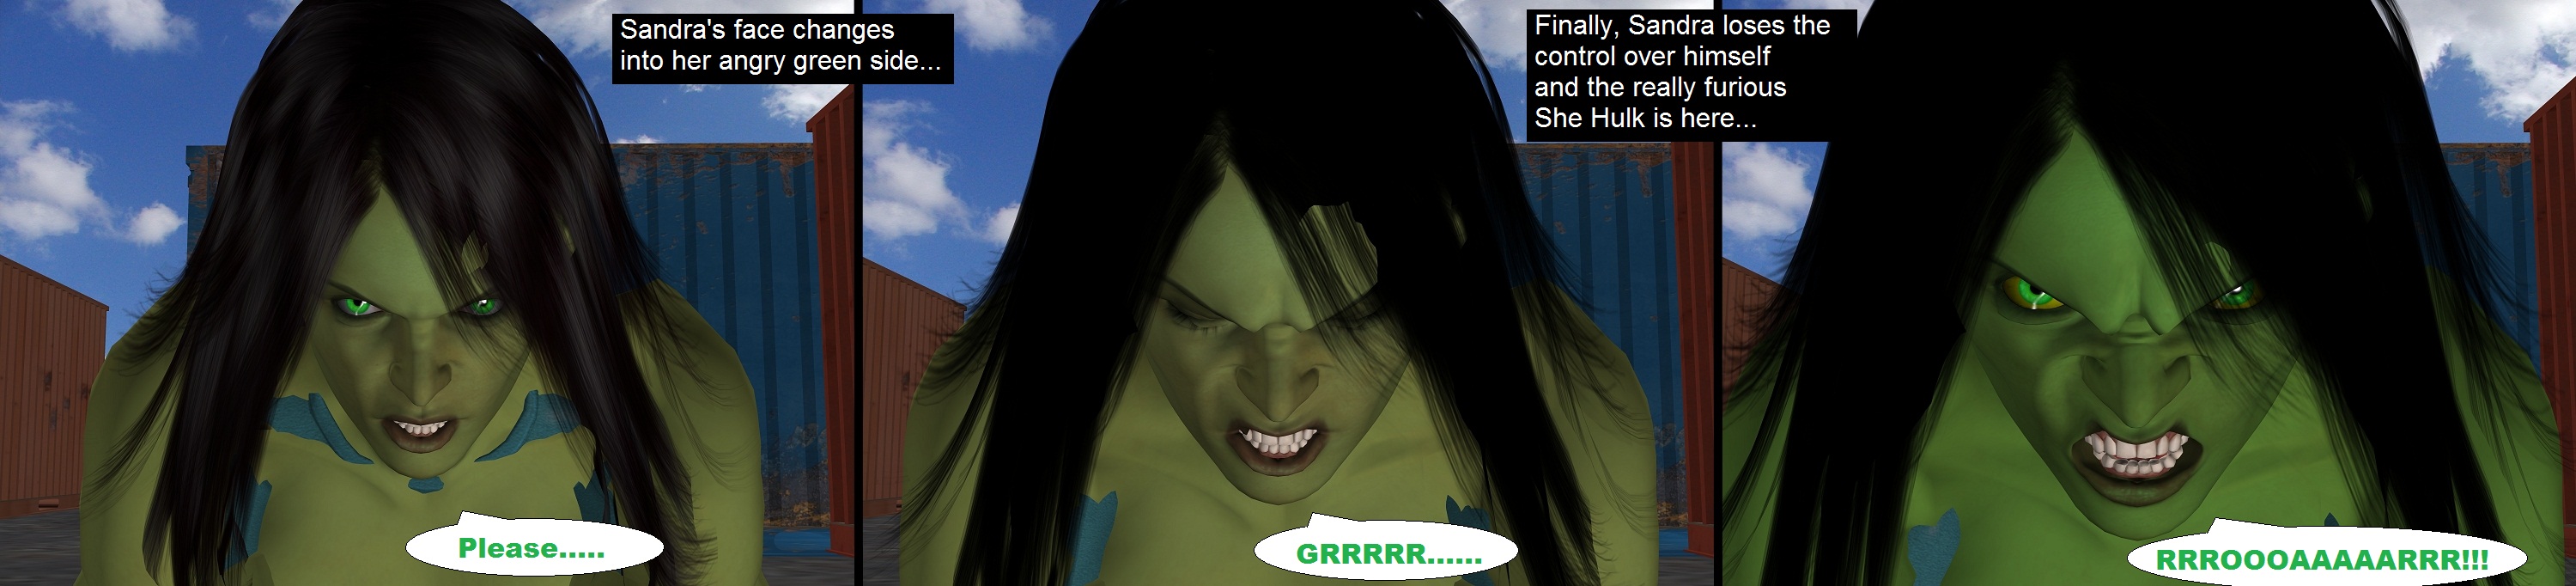 Locked up She-Hulk TF 09 by ZeroCaim88 on DeviantArt